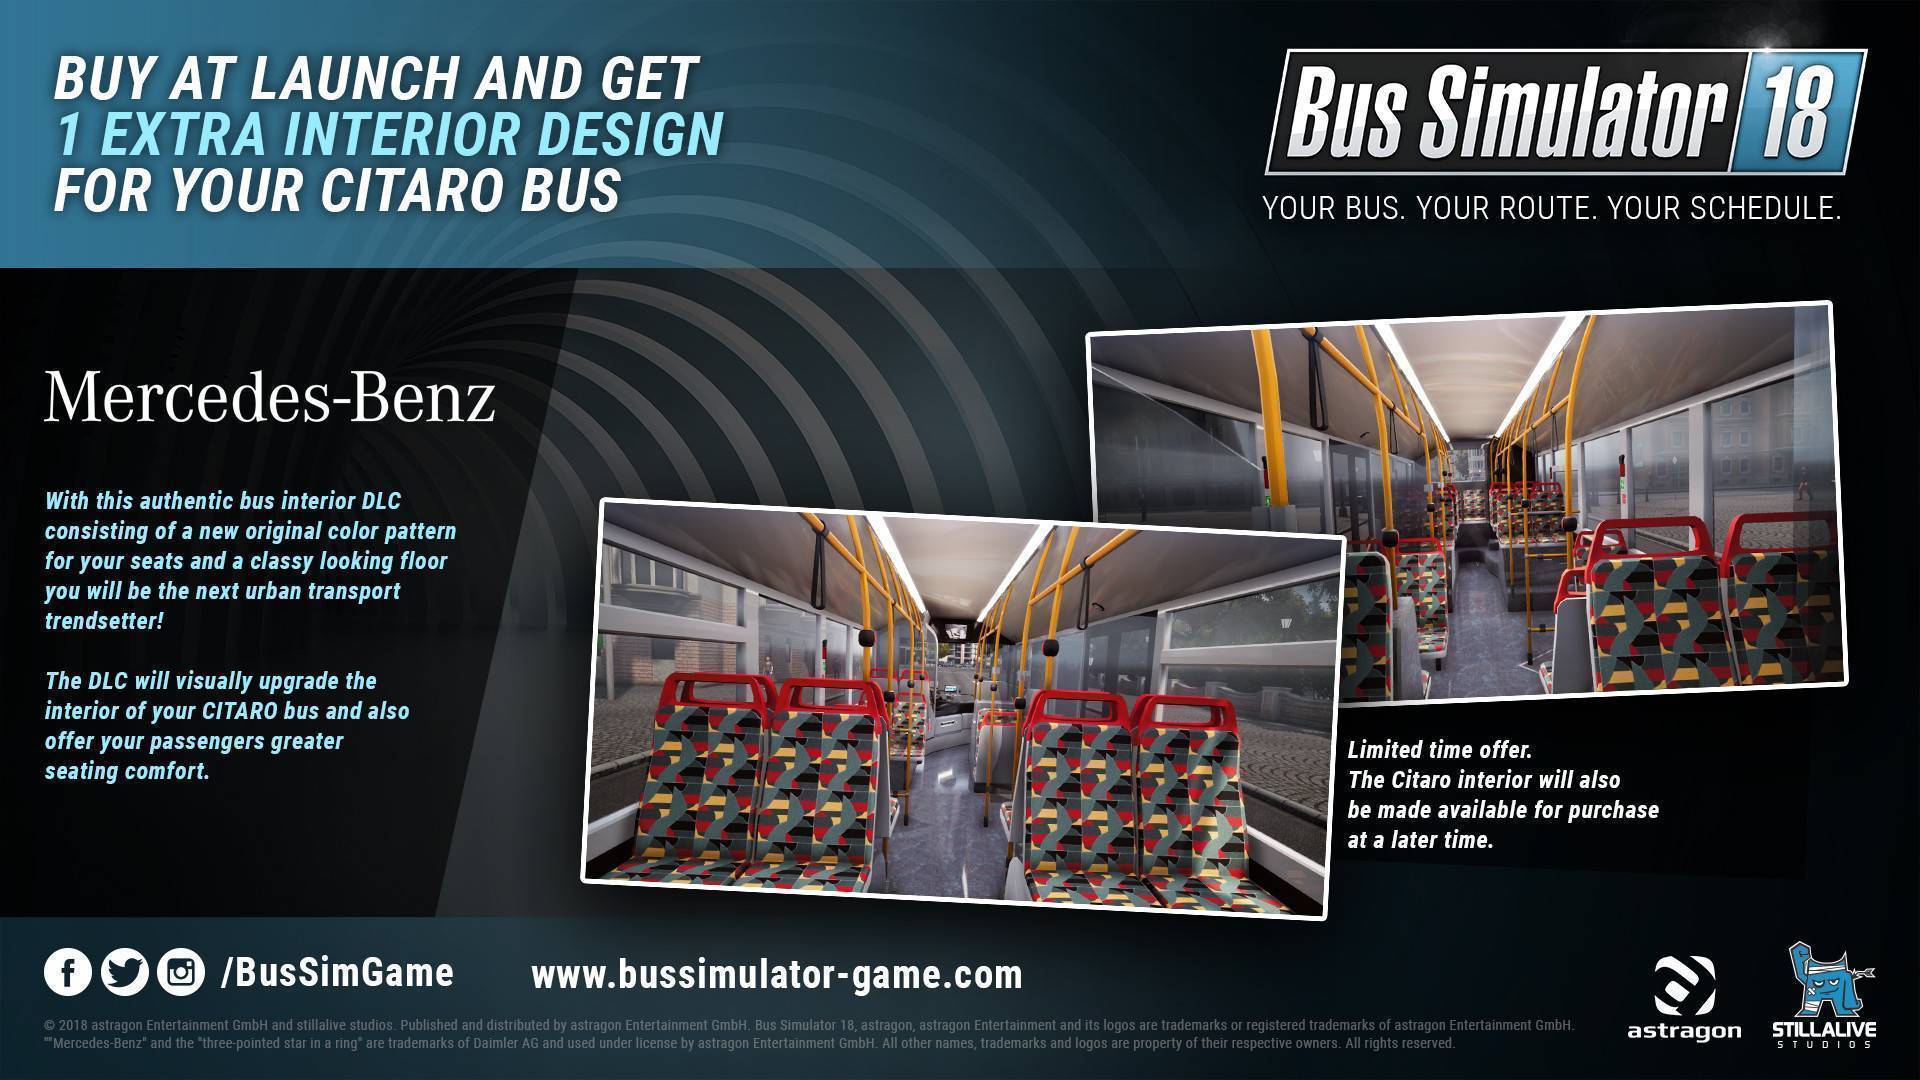 game key bus simulator 18 activation key